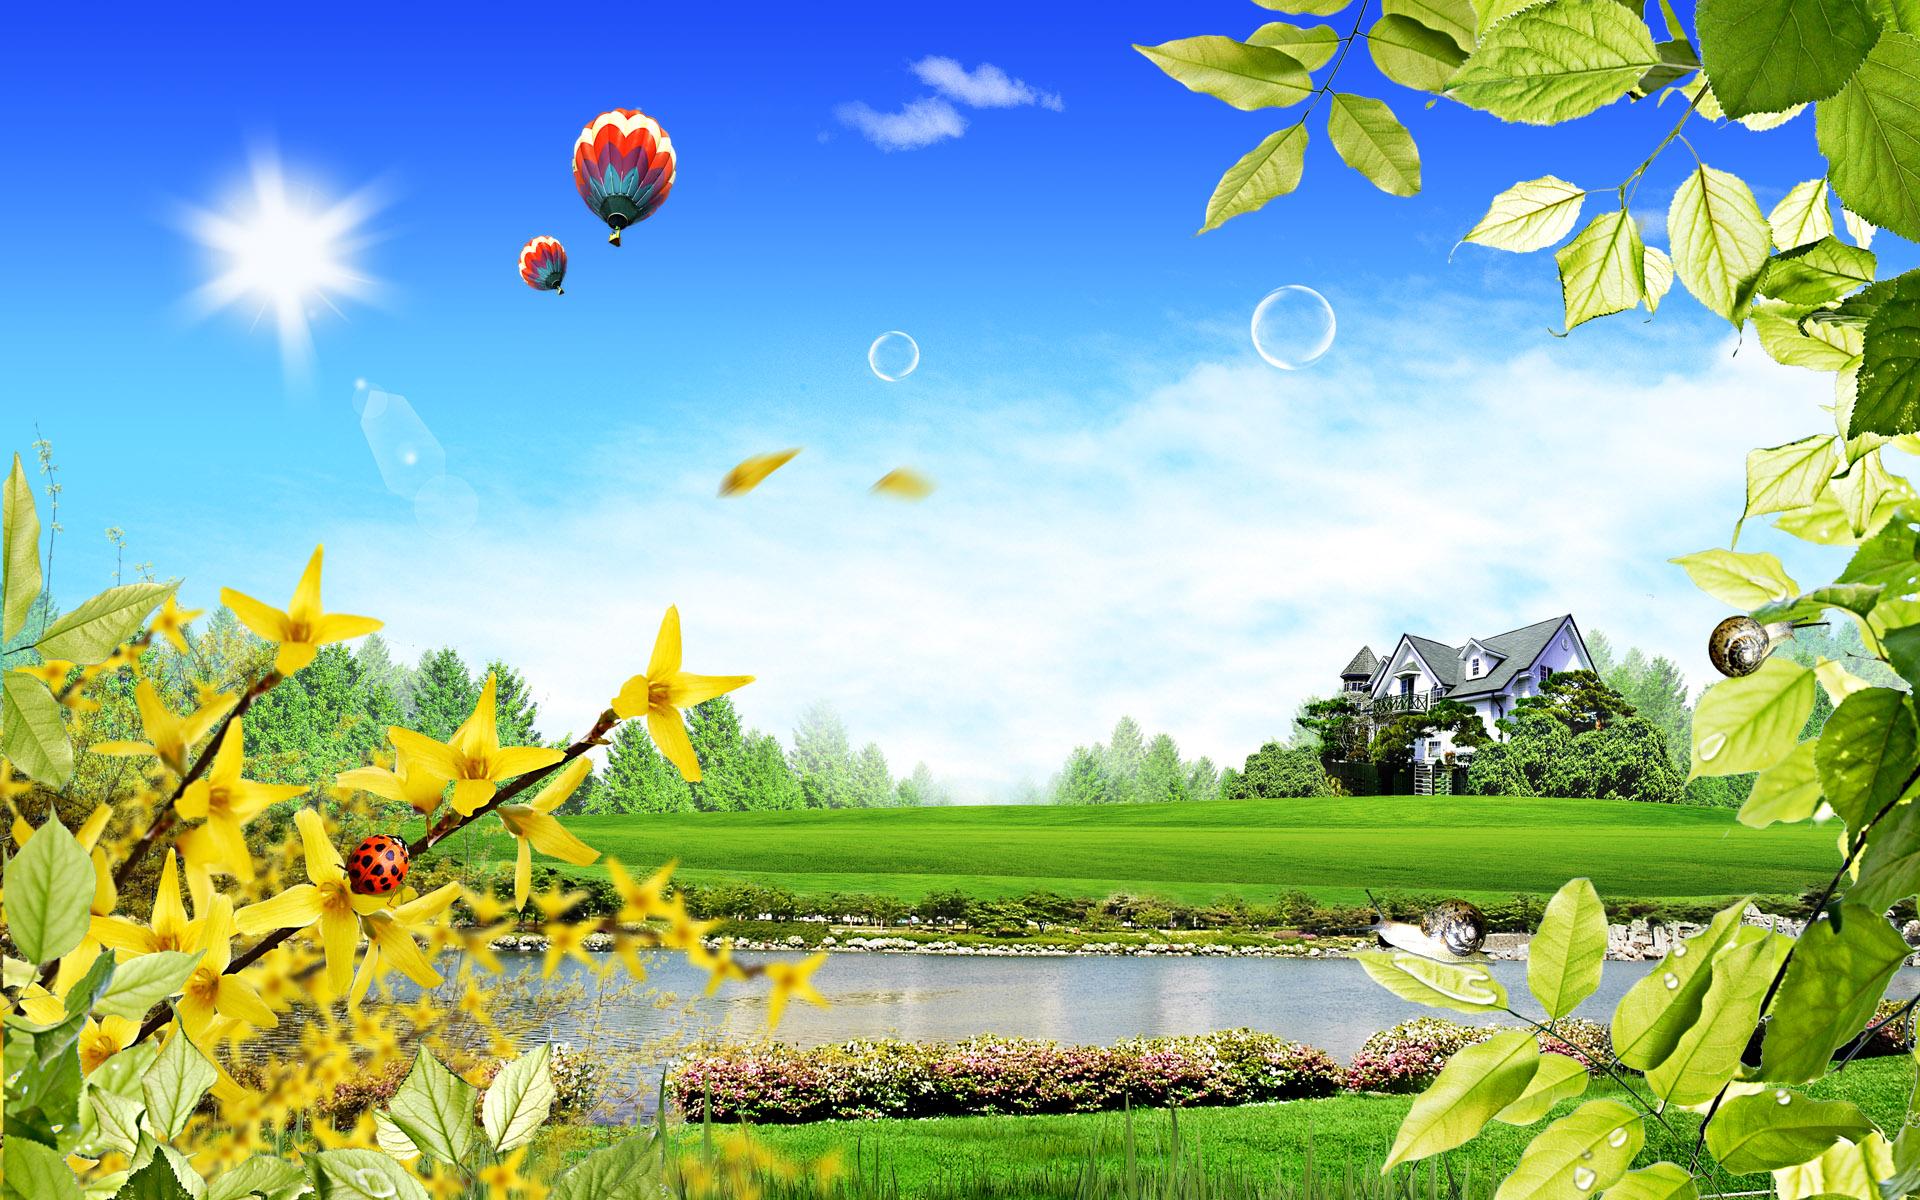  mi9comfree summer fantasy landscape for desktop wallpaper 80970html 1920x1200